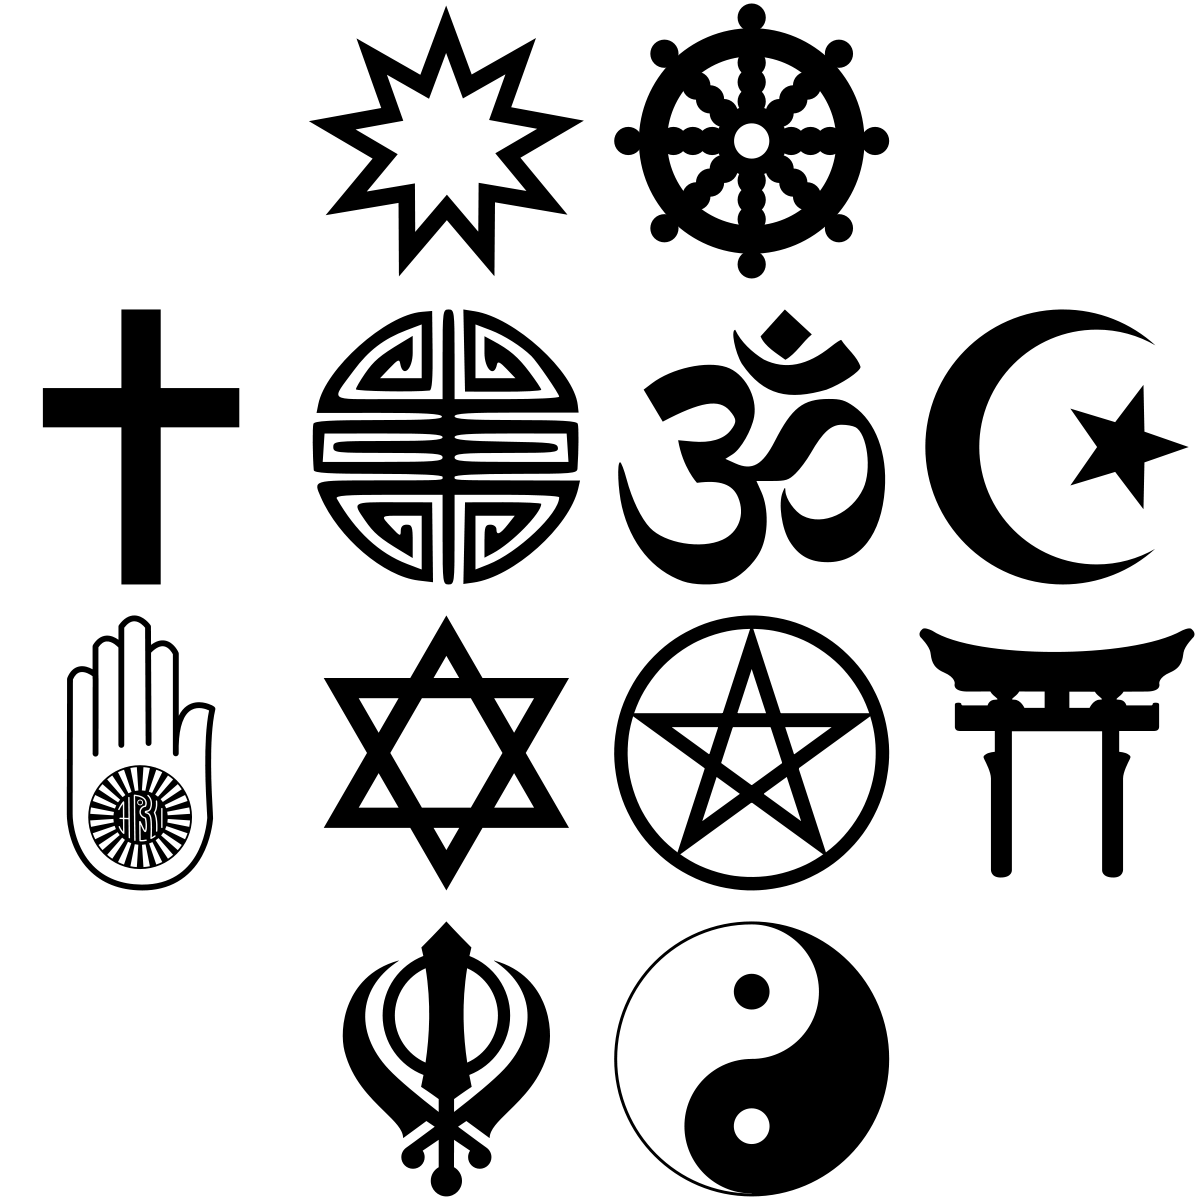 Religious symbols and icons.